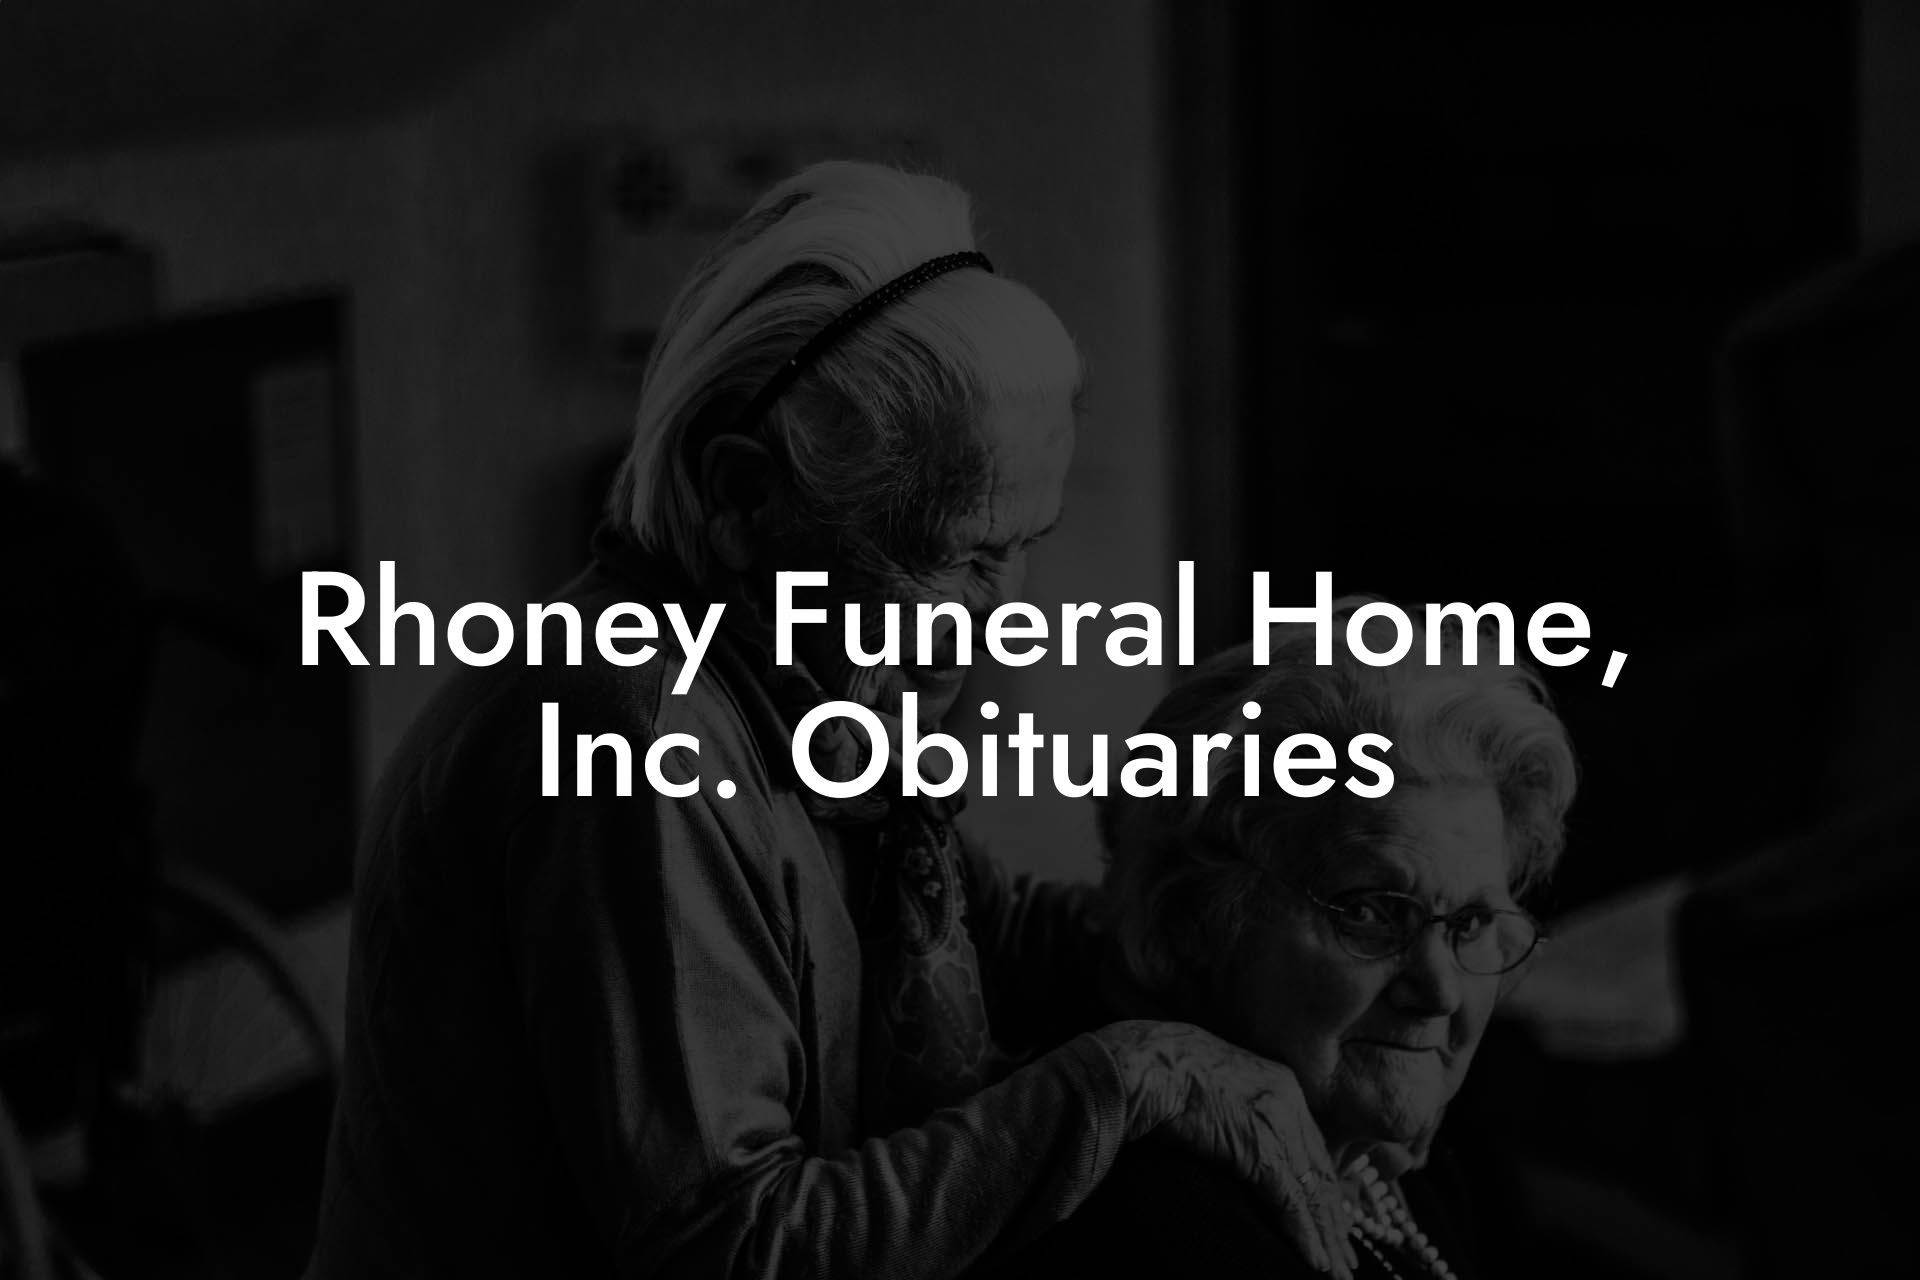 Rhoney Funeral Home, Inc. Obituaries